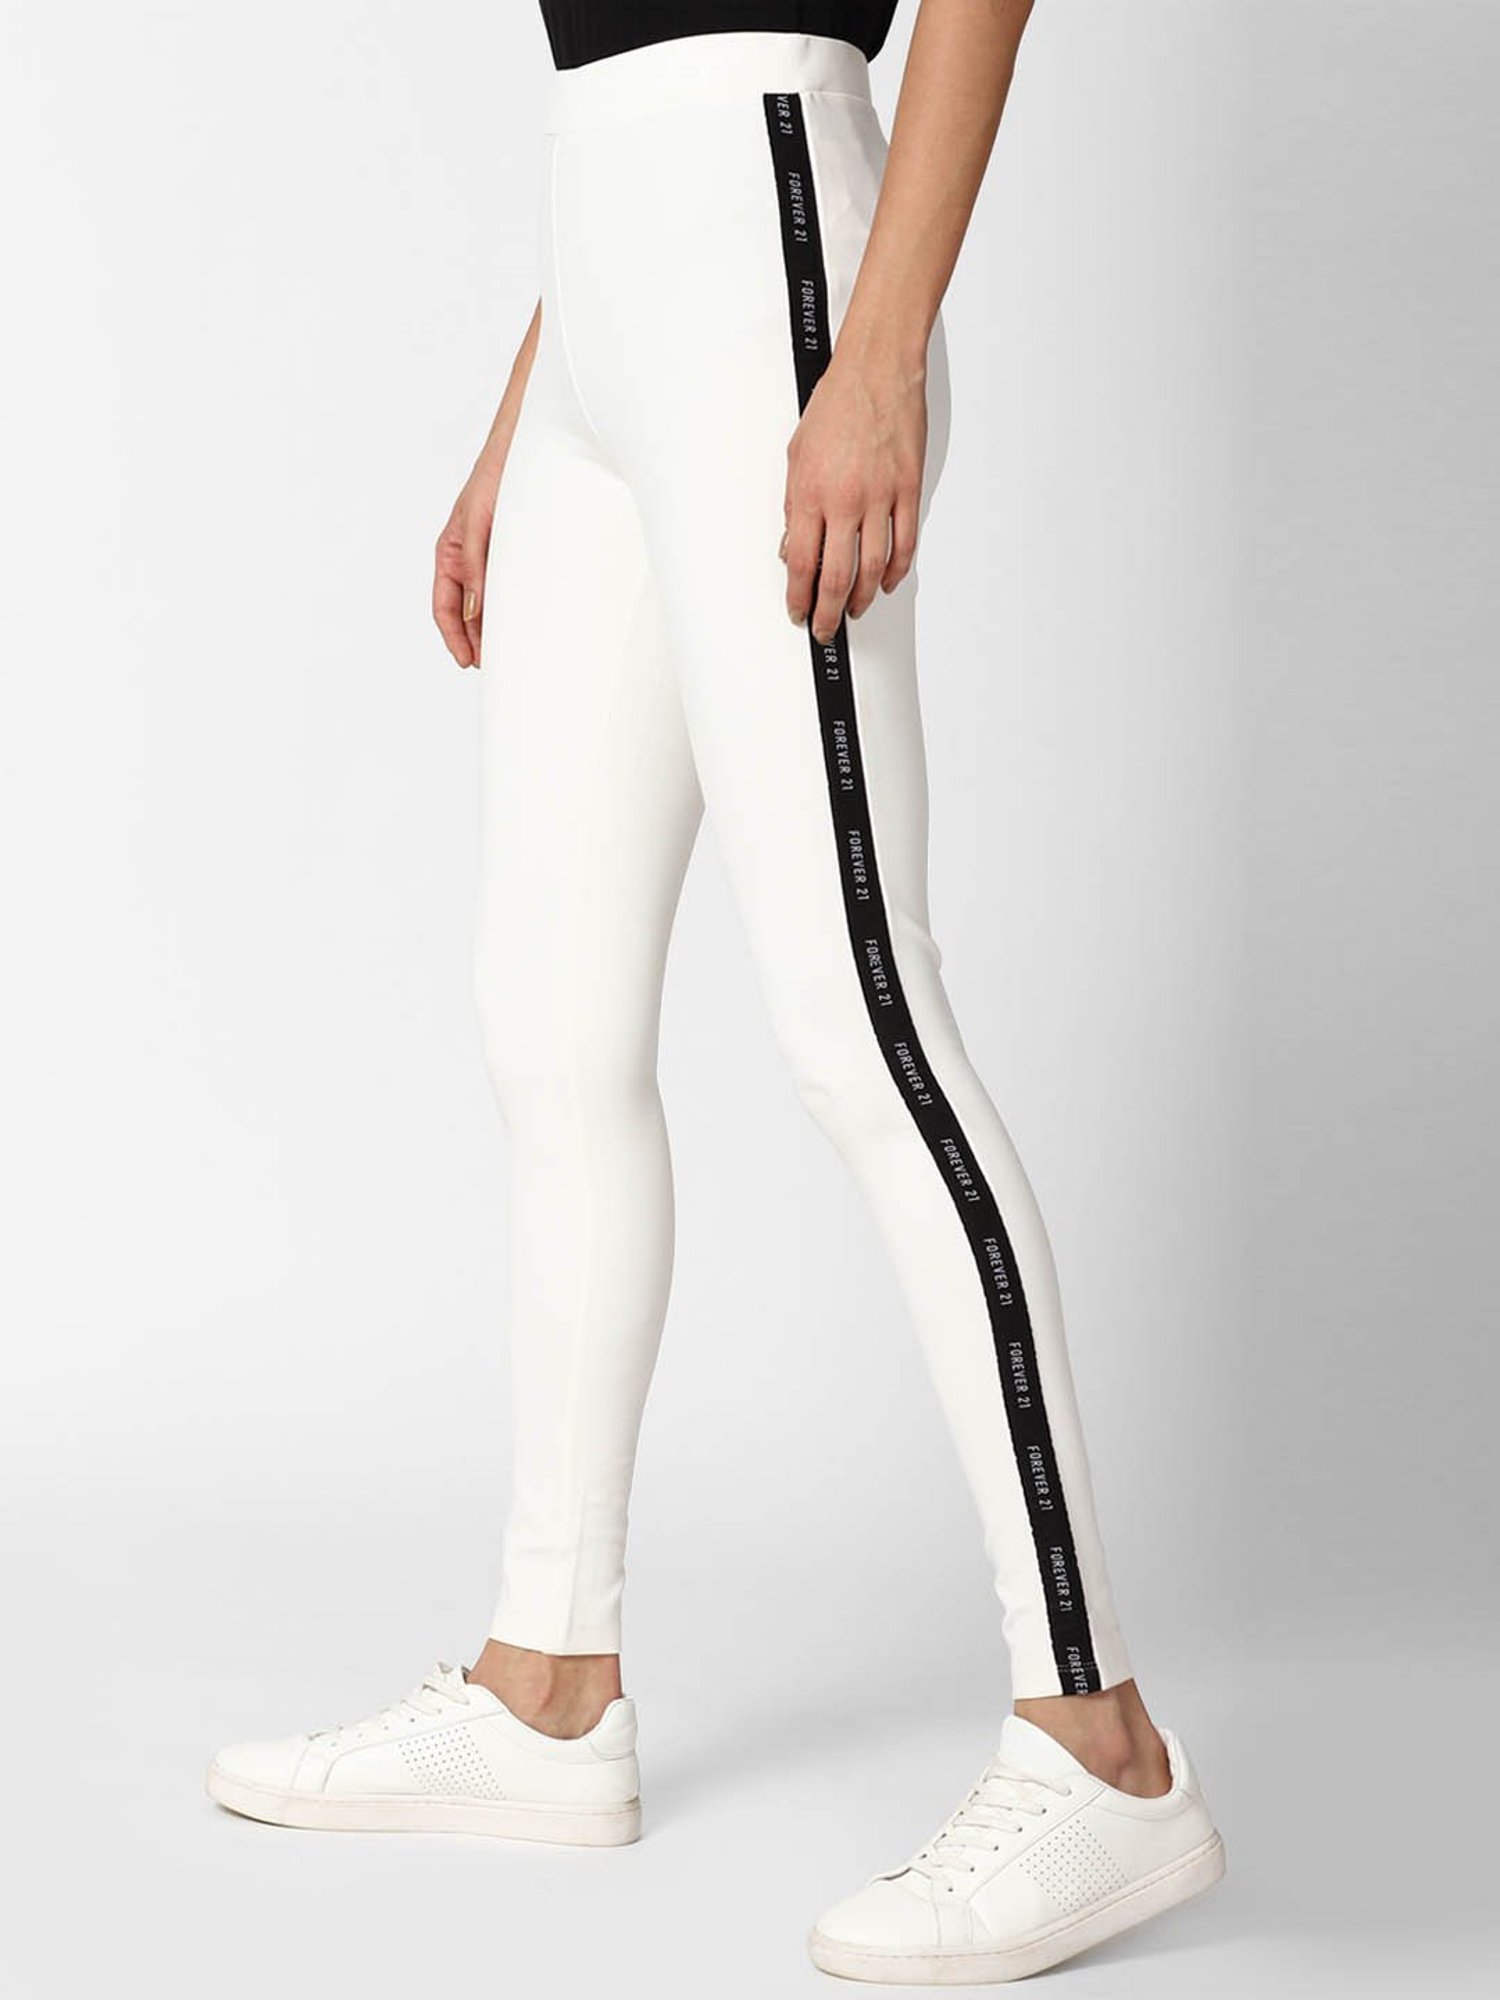 Forever 21 Women's Active Mesh Leggings in White, XS | CoolSprings Galleria